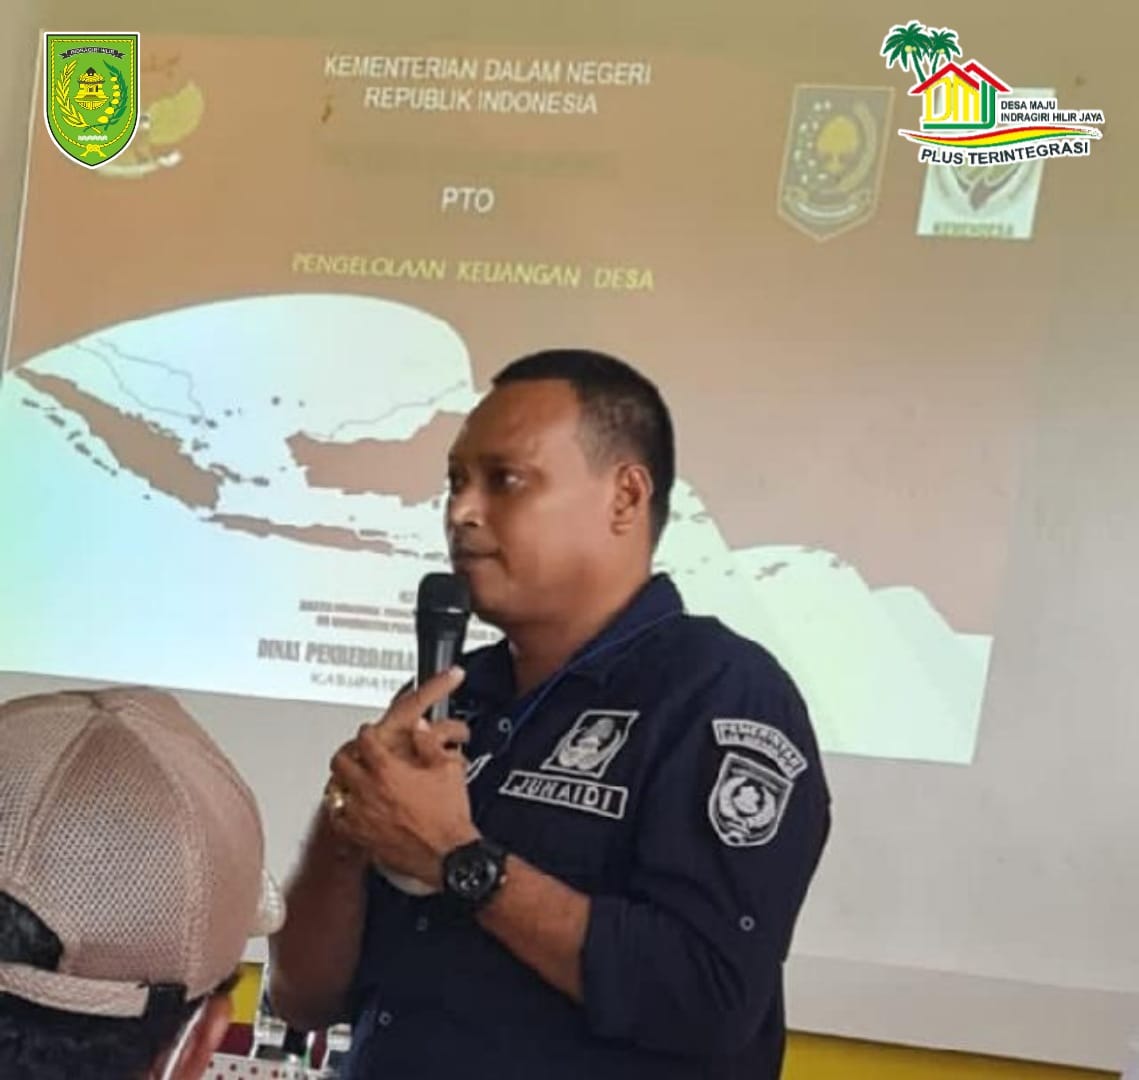 DMIJ Plus Terintegrasi Dampingi Tim DPMD Inhil Gelar Sosialisasi PTOPKD ke Pemdes se-Kecamatan Kateman